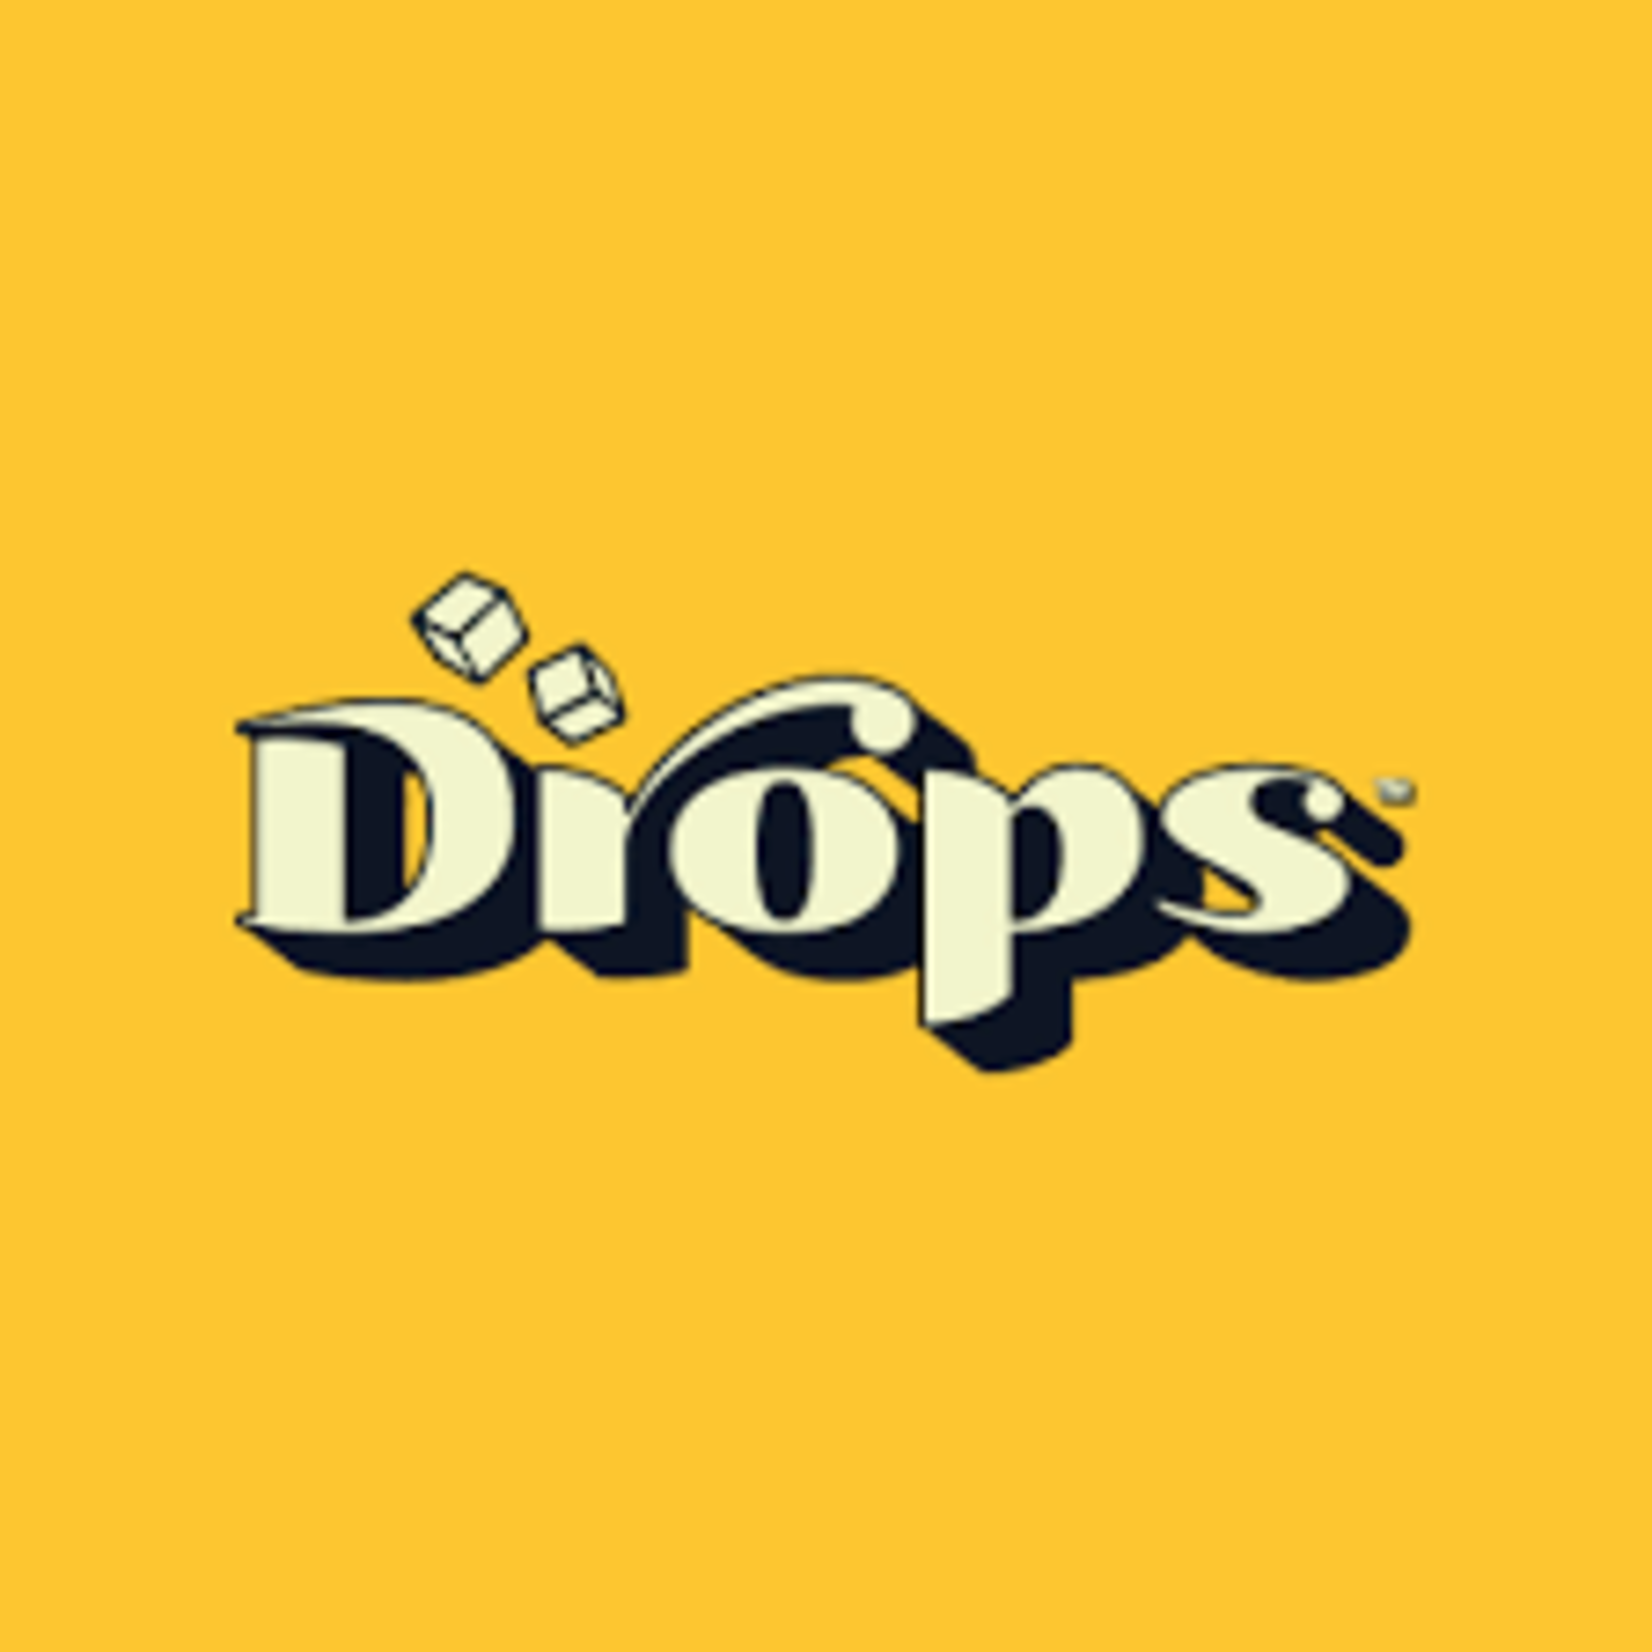 Drops / Raspberry 1:2